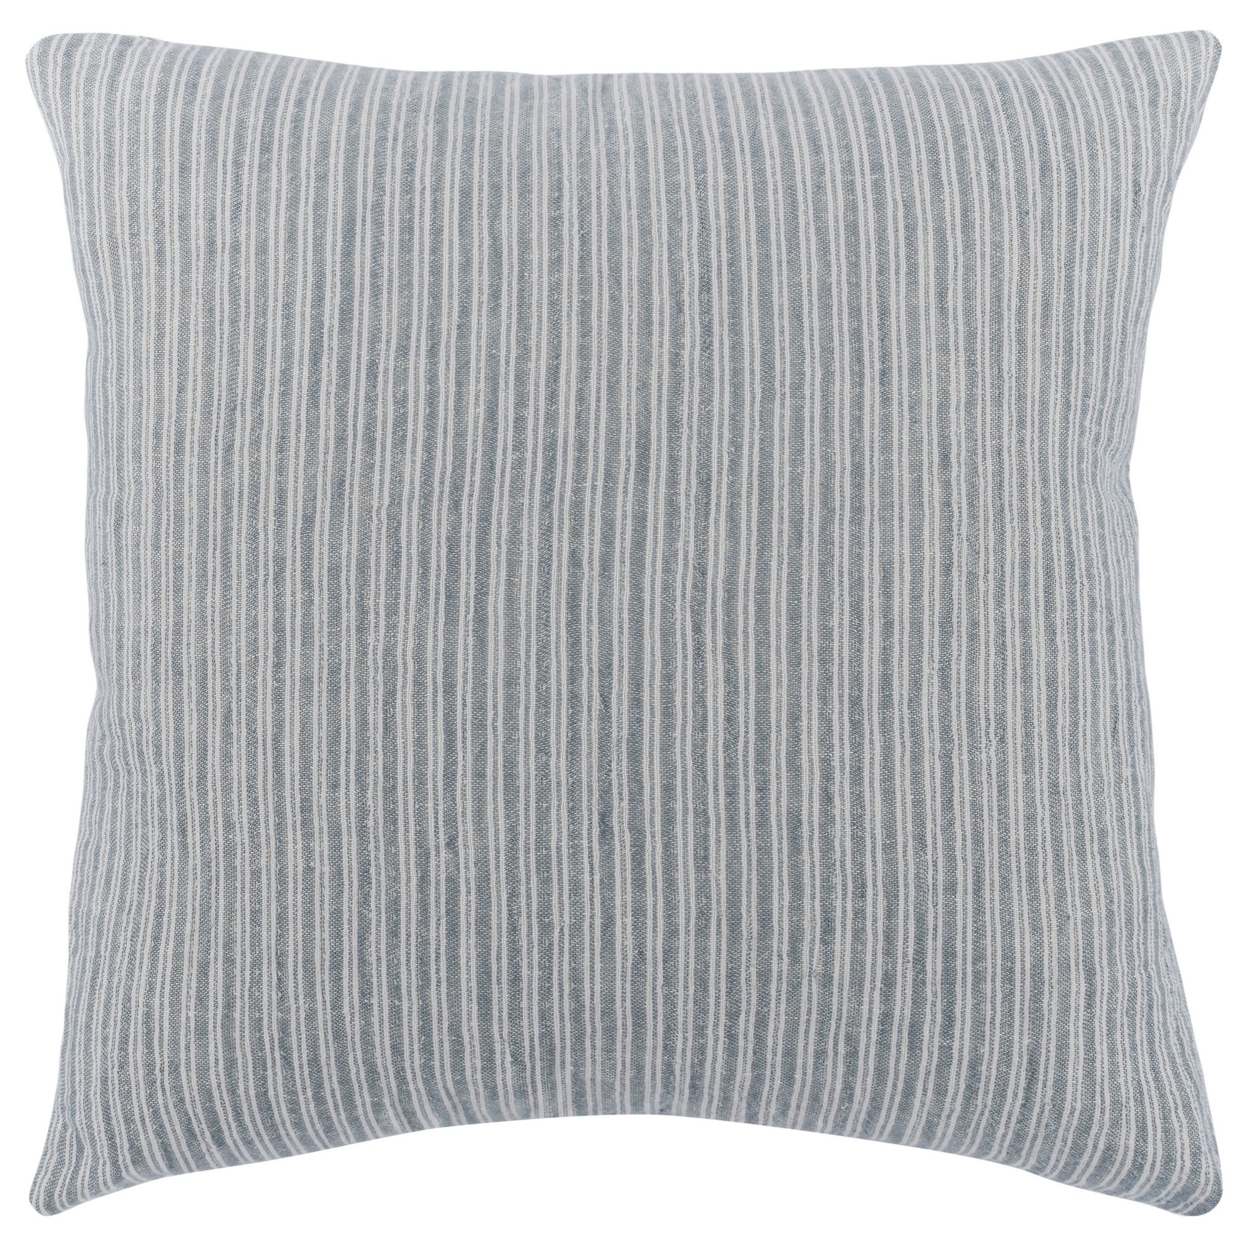 Irma 22 Inch Square Soft Fabric Accent Throw Pillow, Blue Pinstripe Pattern, Saltoro Sherpi